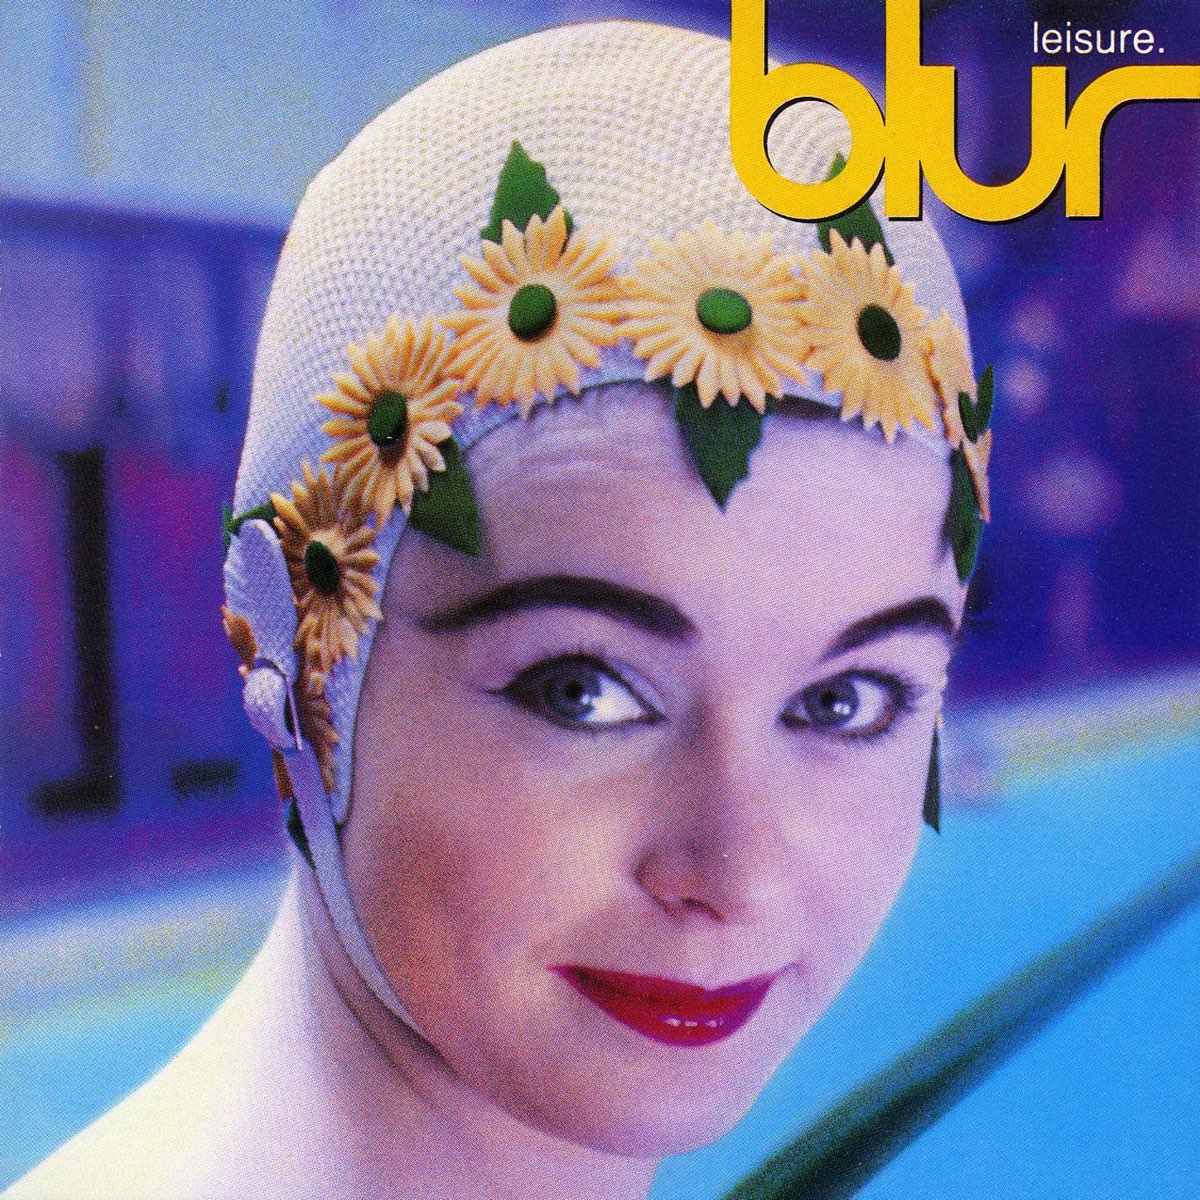 ‎Leisure (Special Edition) - Álbum de Blur - Apple Music